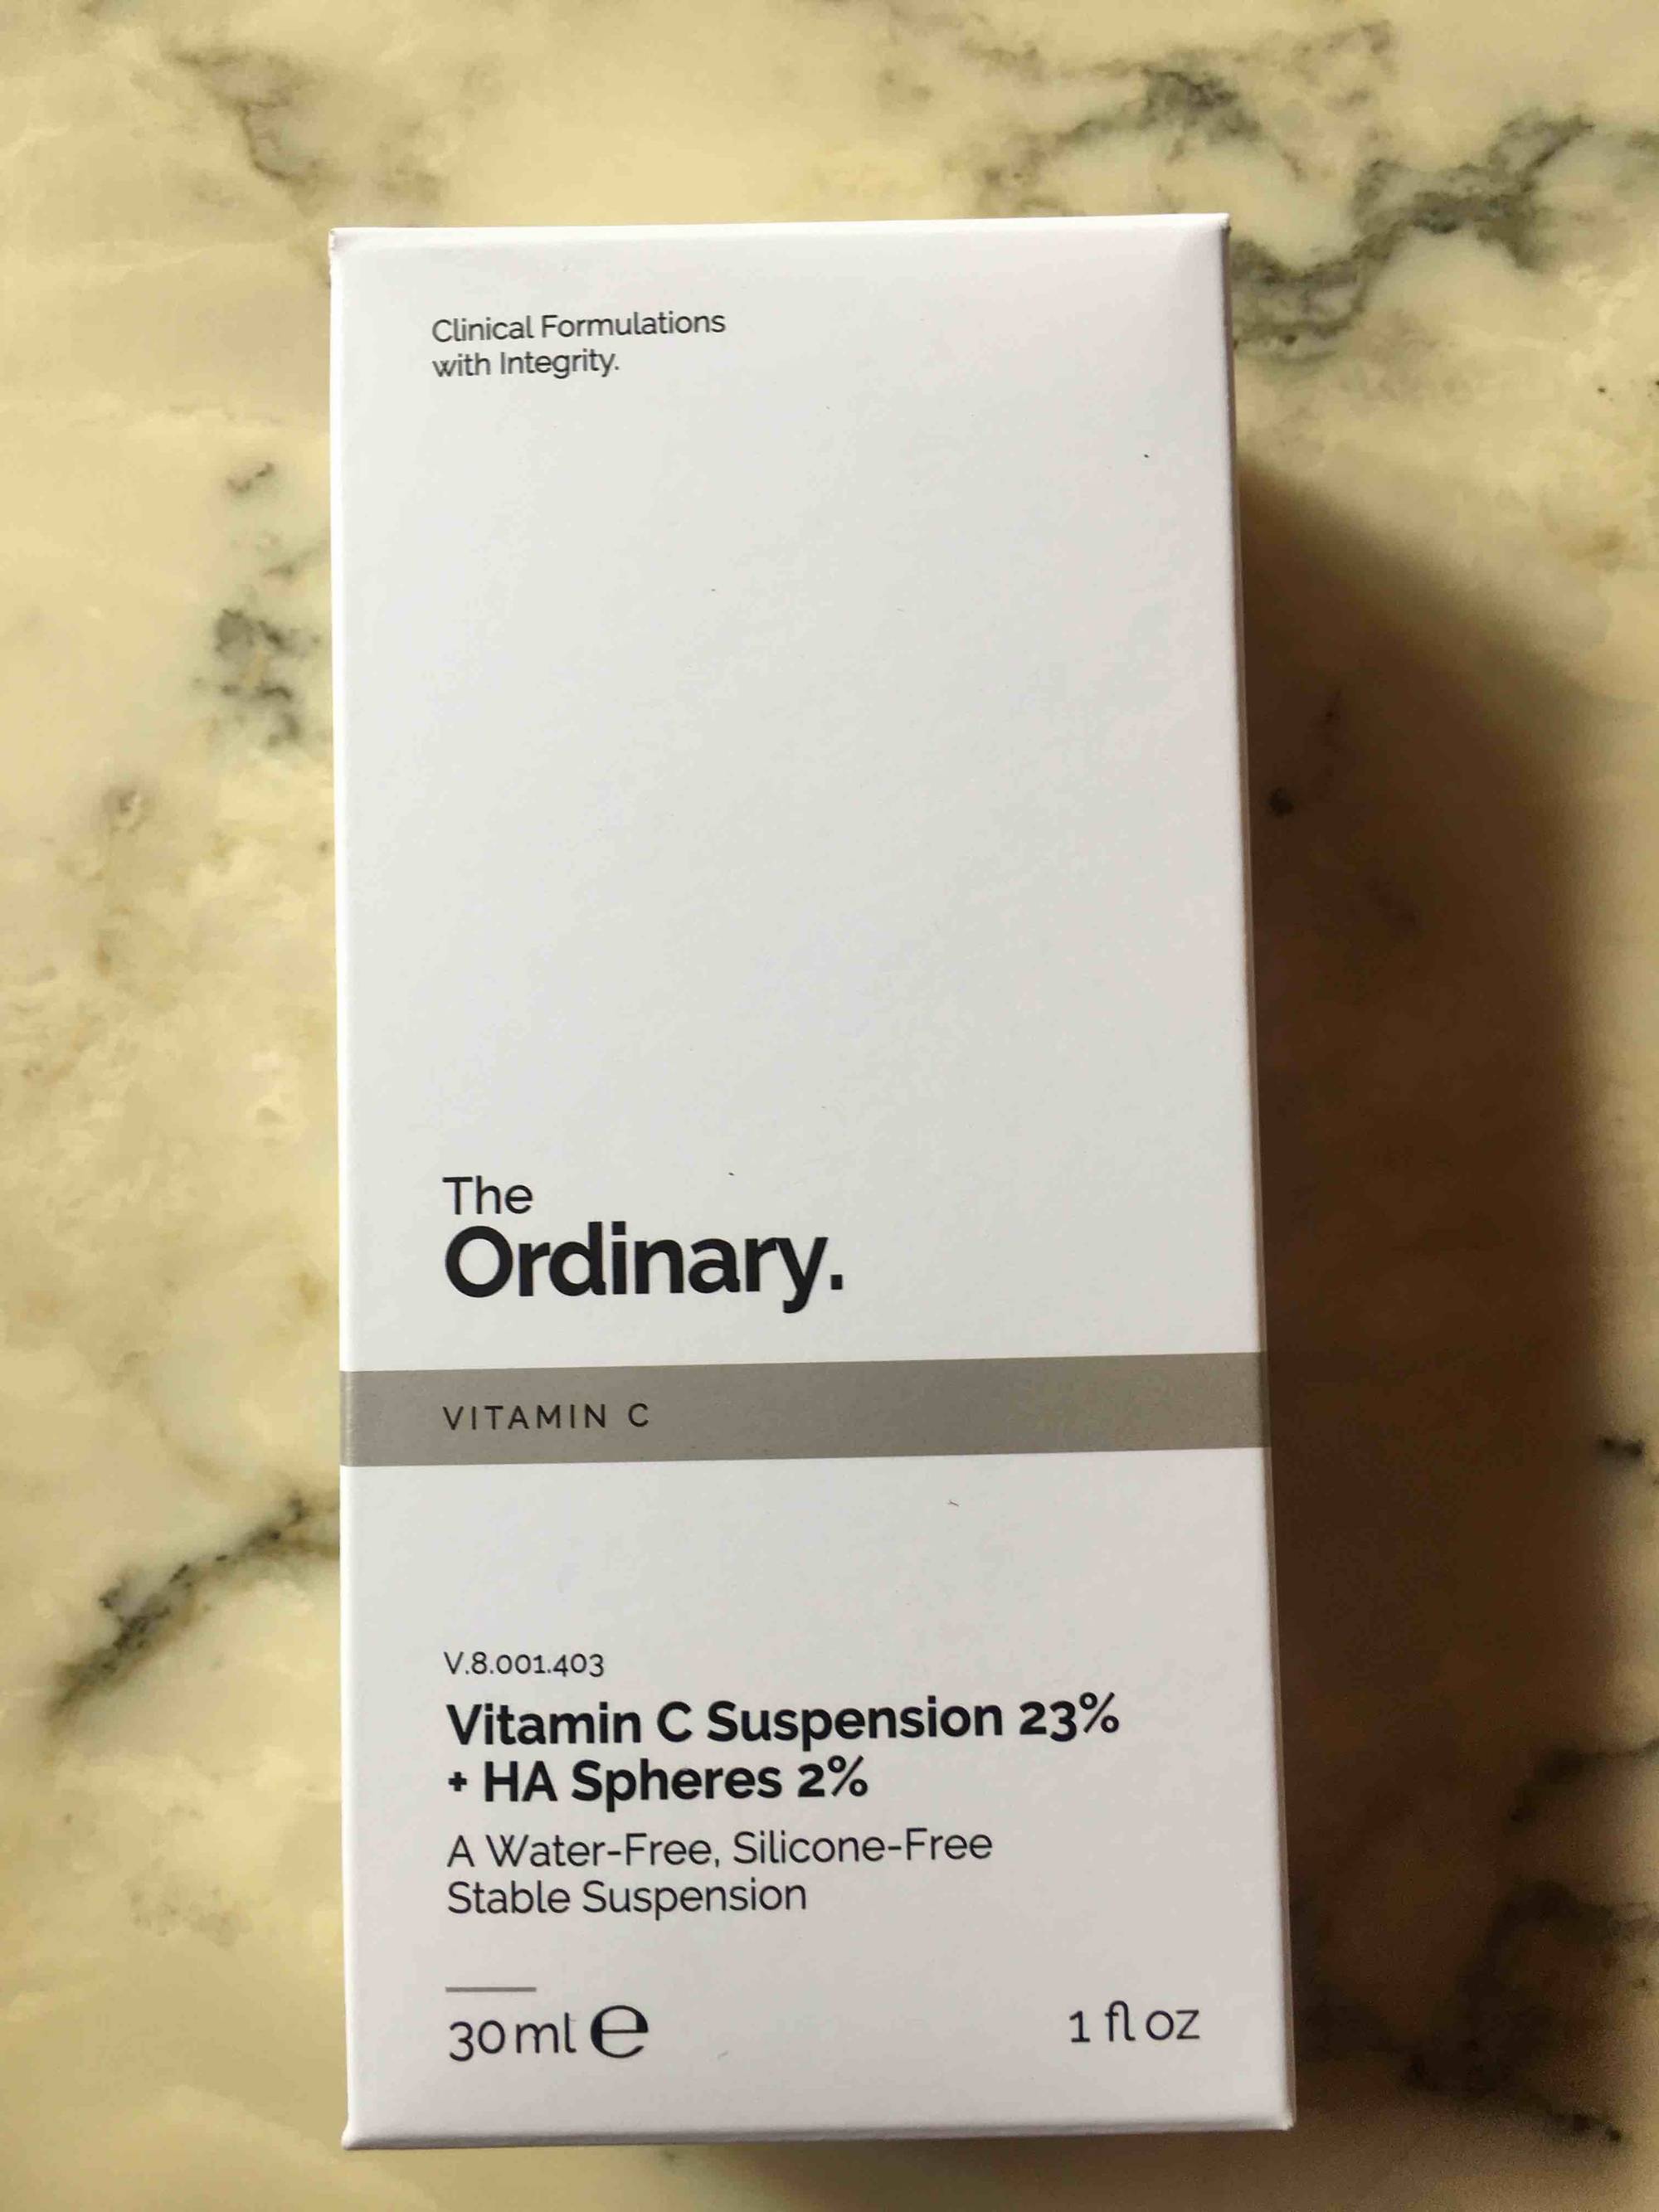 THE ORDINARY - Suspension de Vitamine C 23% + HA spheres 2%